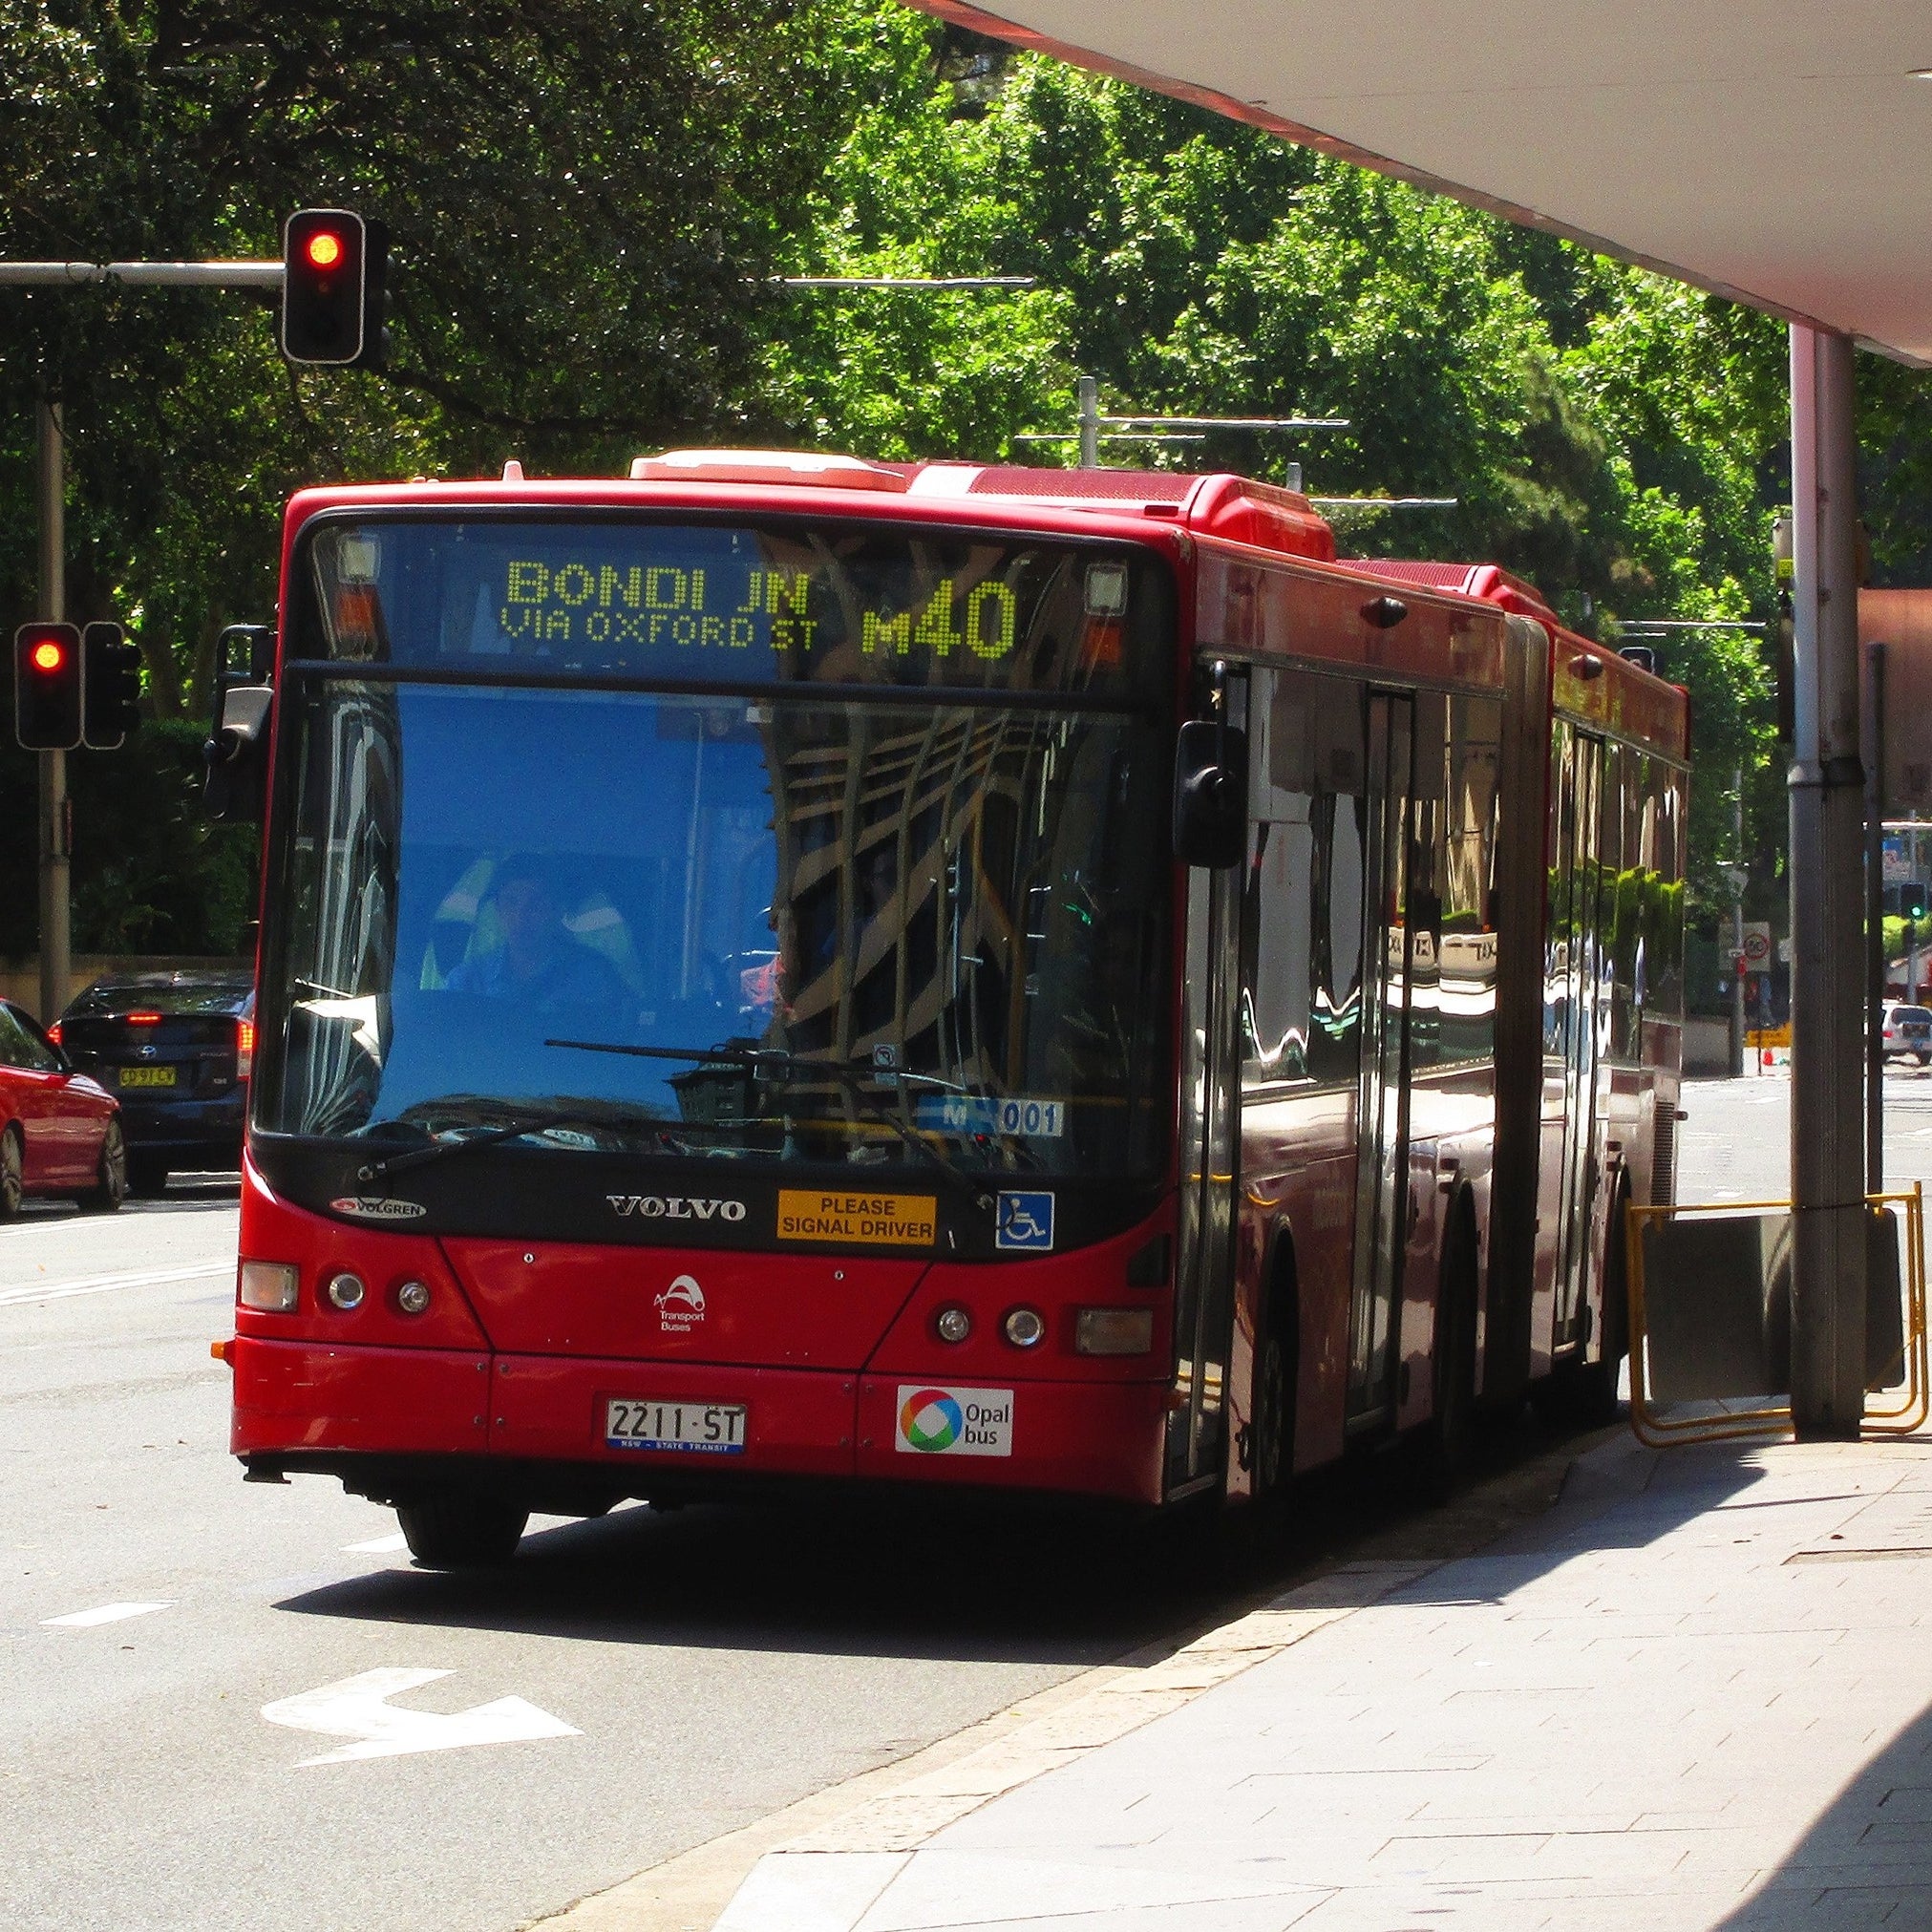 Sex in buses in Sydney